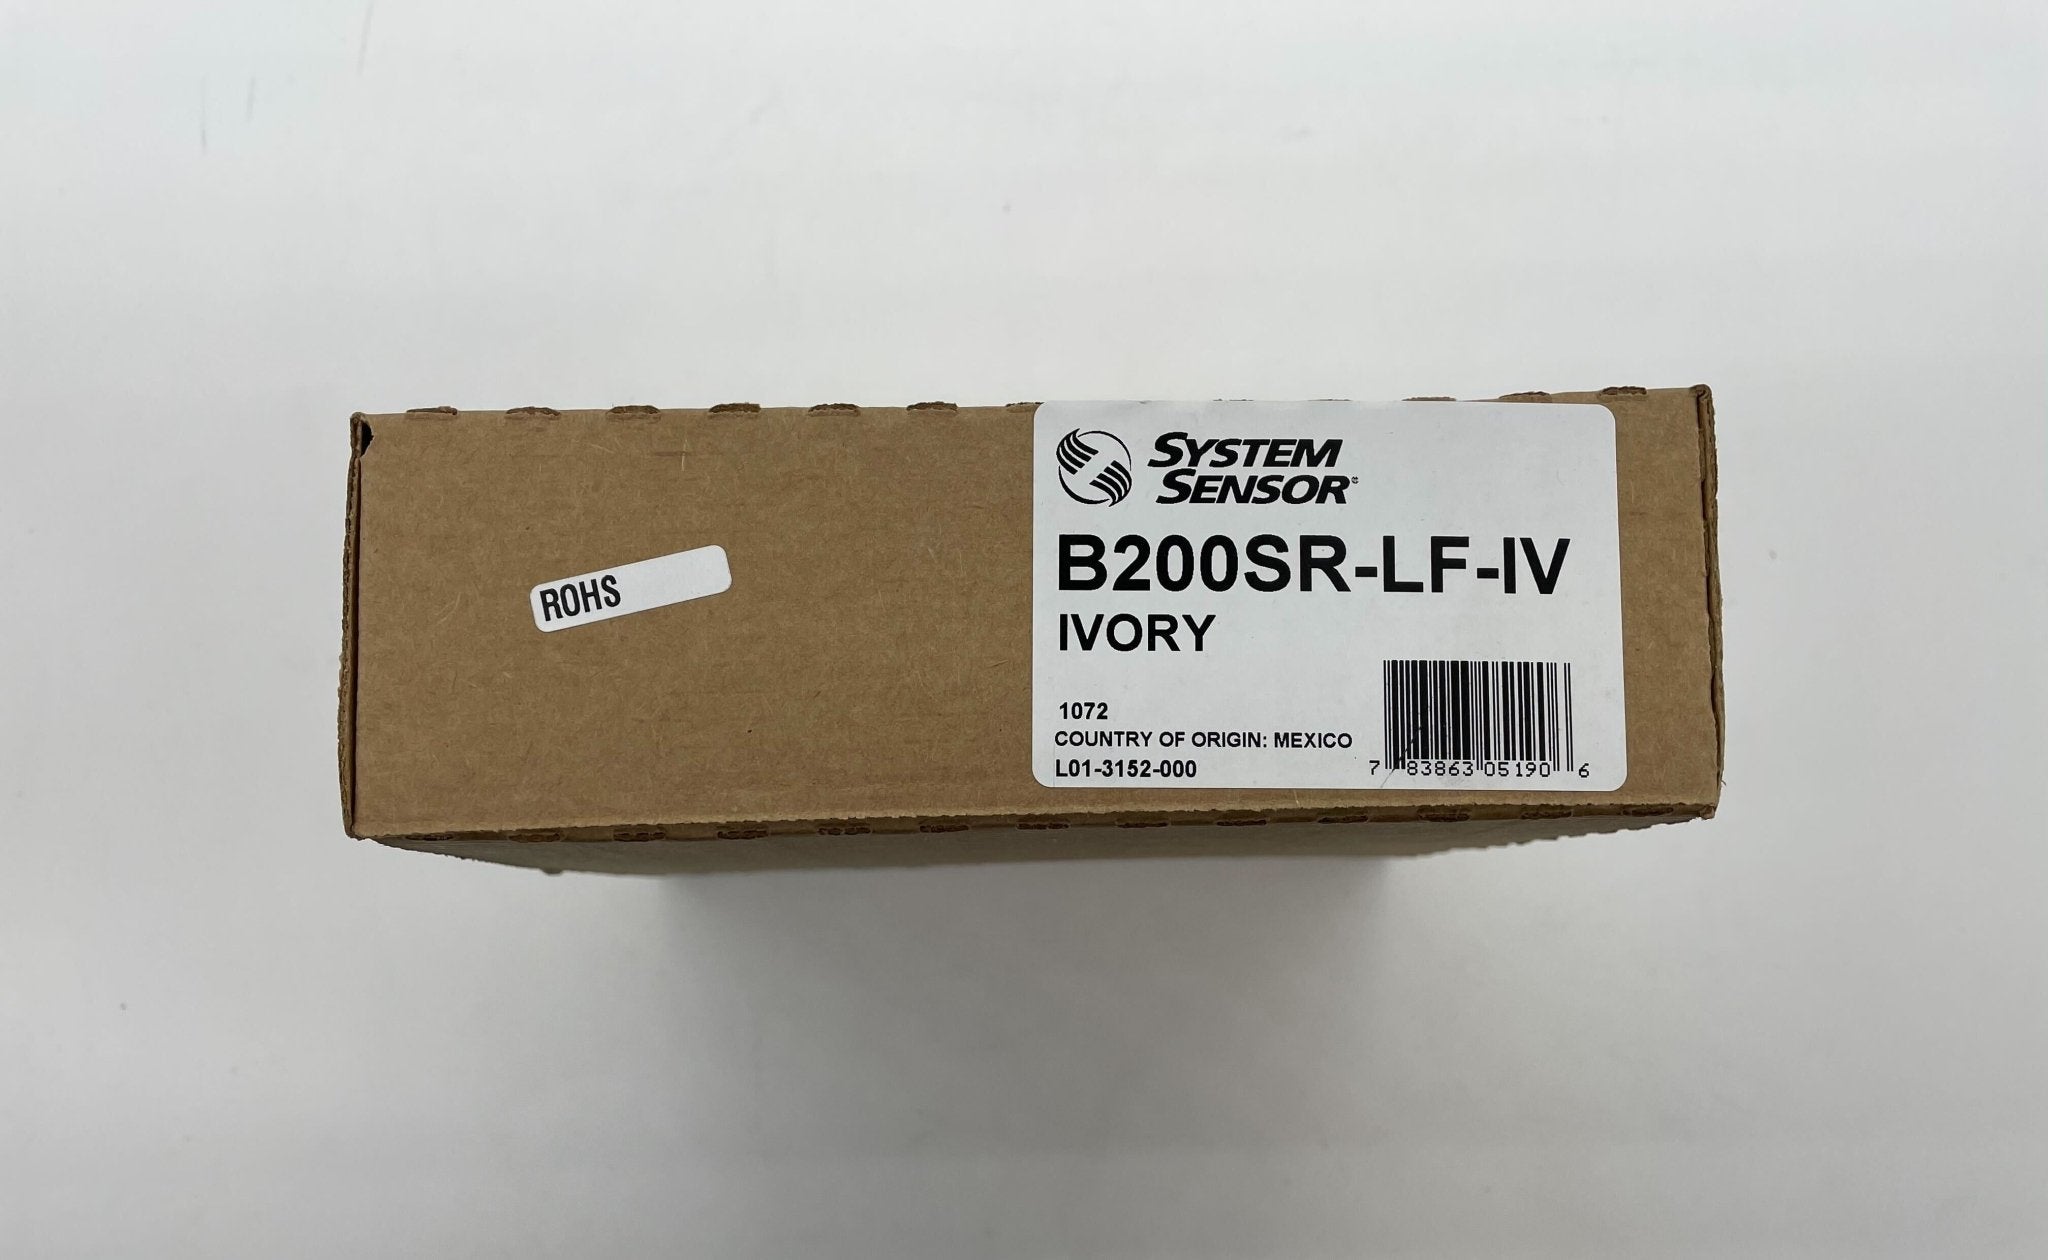 System Sensor B200SR-LF-IV - The Fire Alarm Supplier